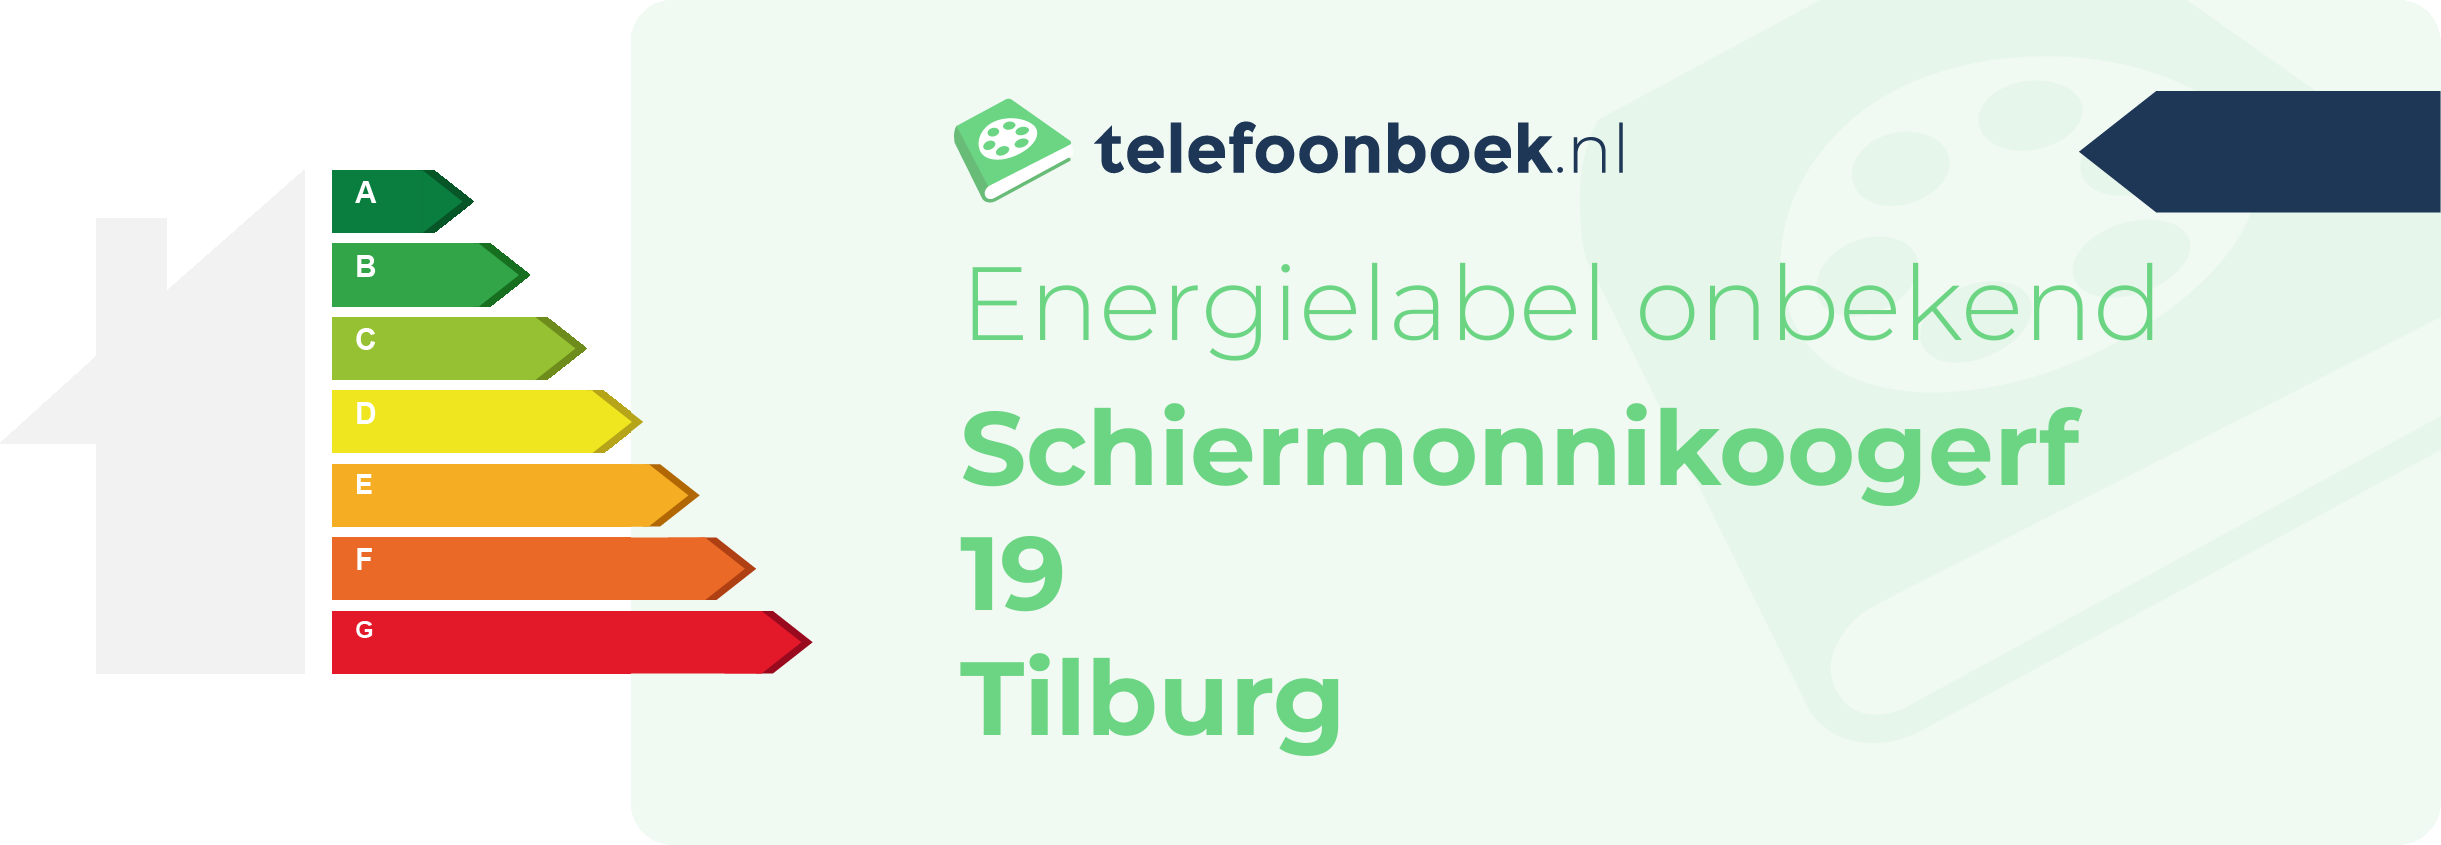 Energielabel Schiermonnikoogerf 19 Tilburg